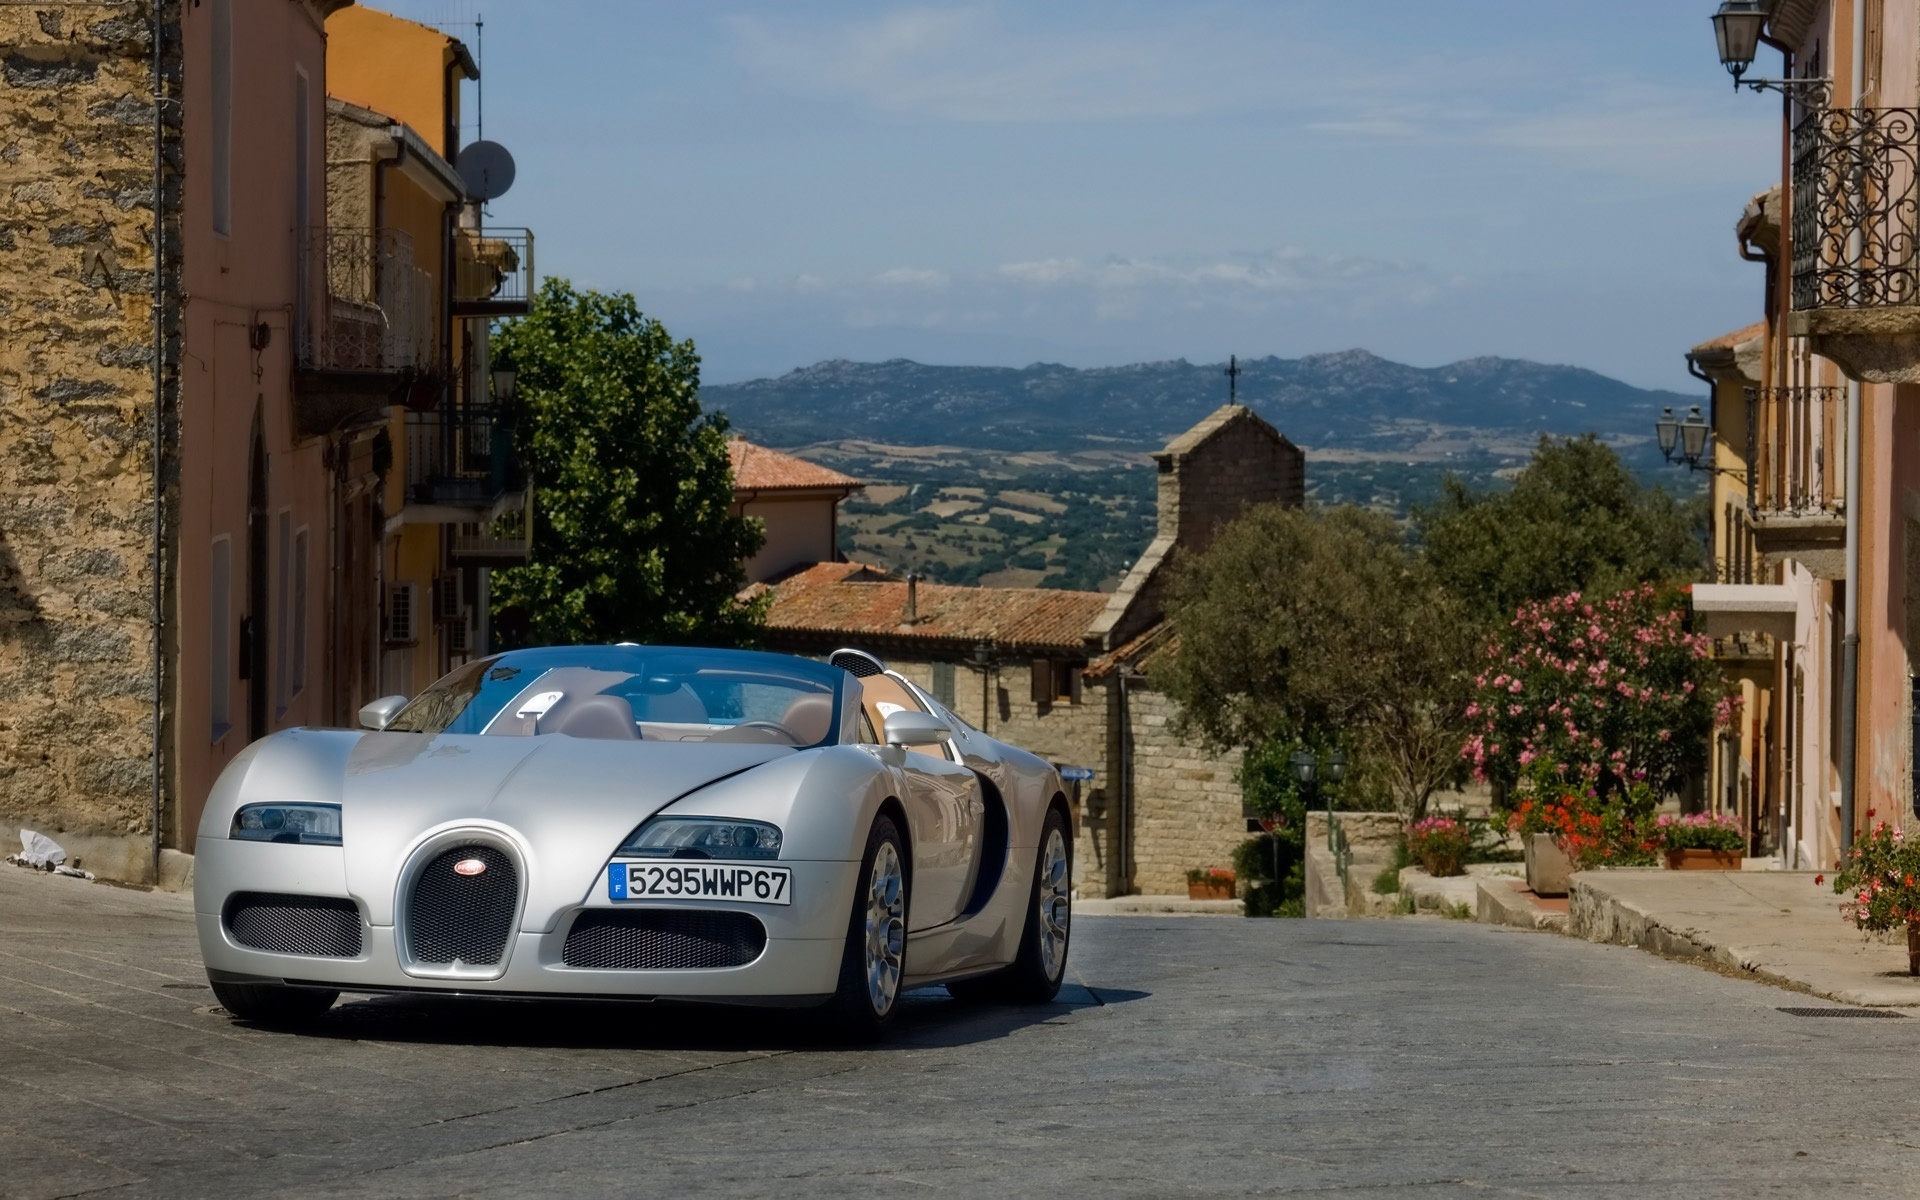 Bugatti Veyron 16.4 Grand Sport 2010 in Sardinia - Front Angle for 1920 x 1200 widescreen resolution